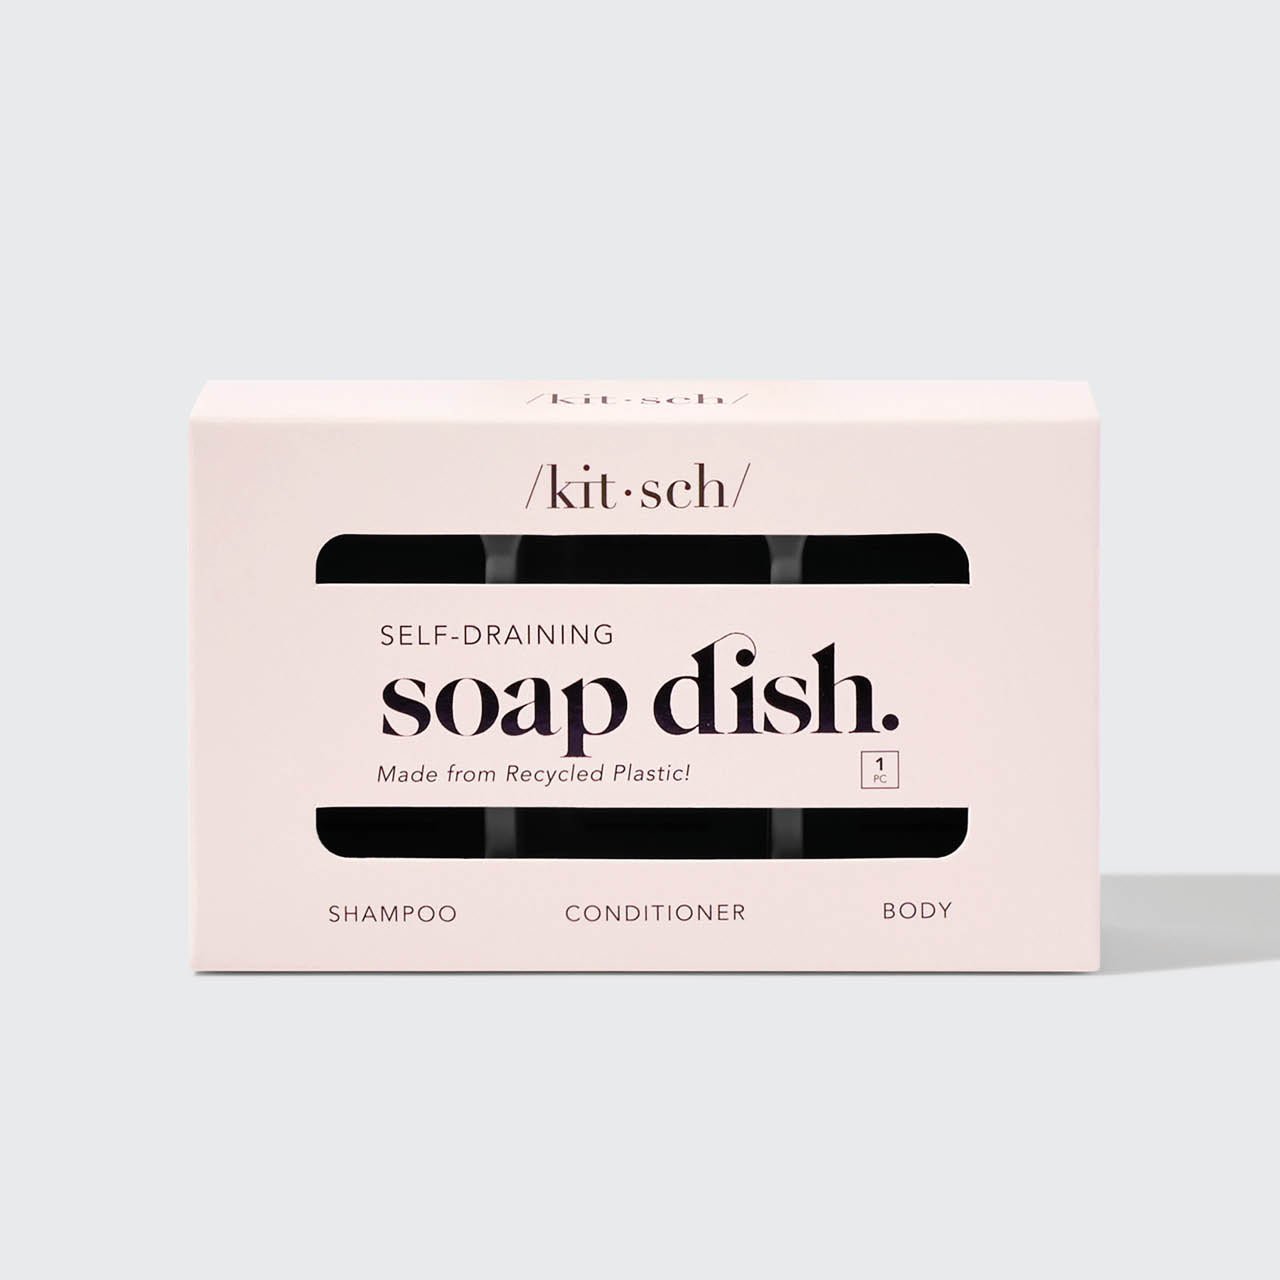 Self-Draining Soap Dish - Black